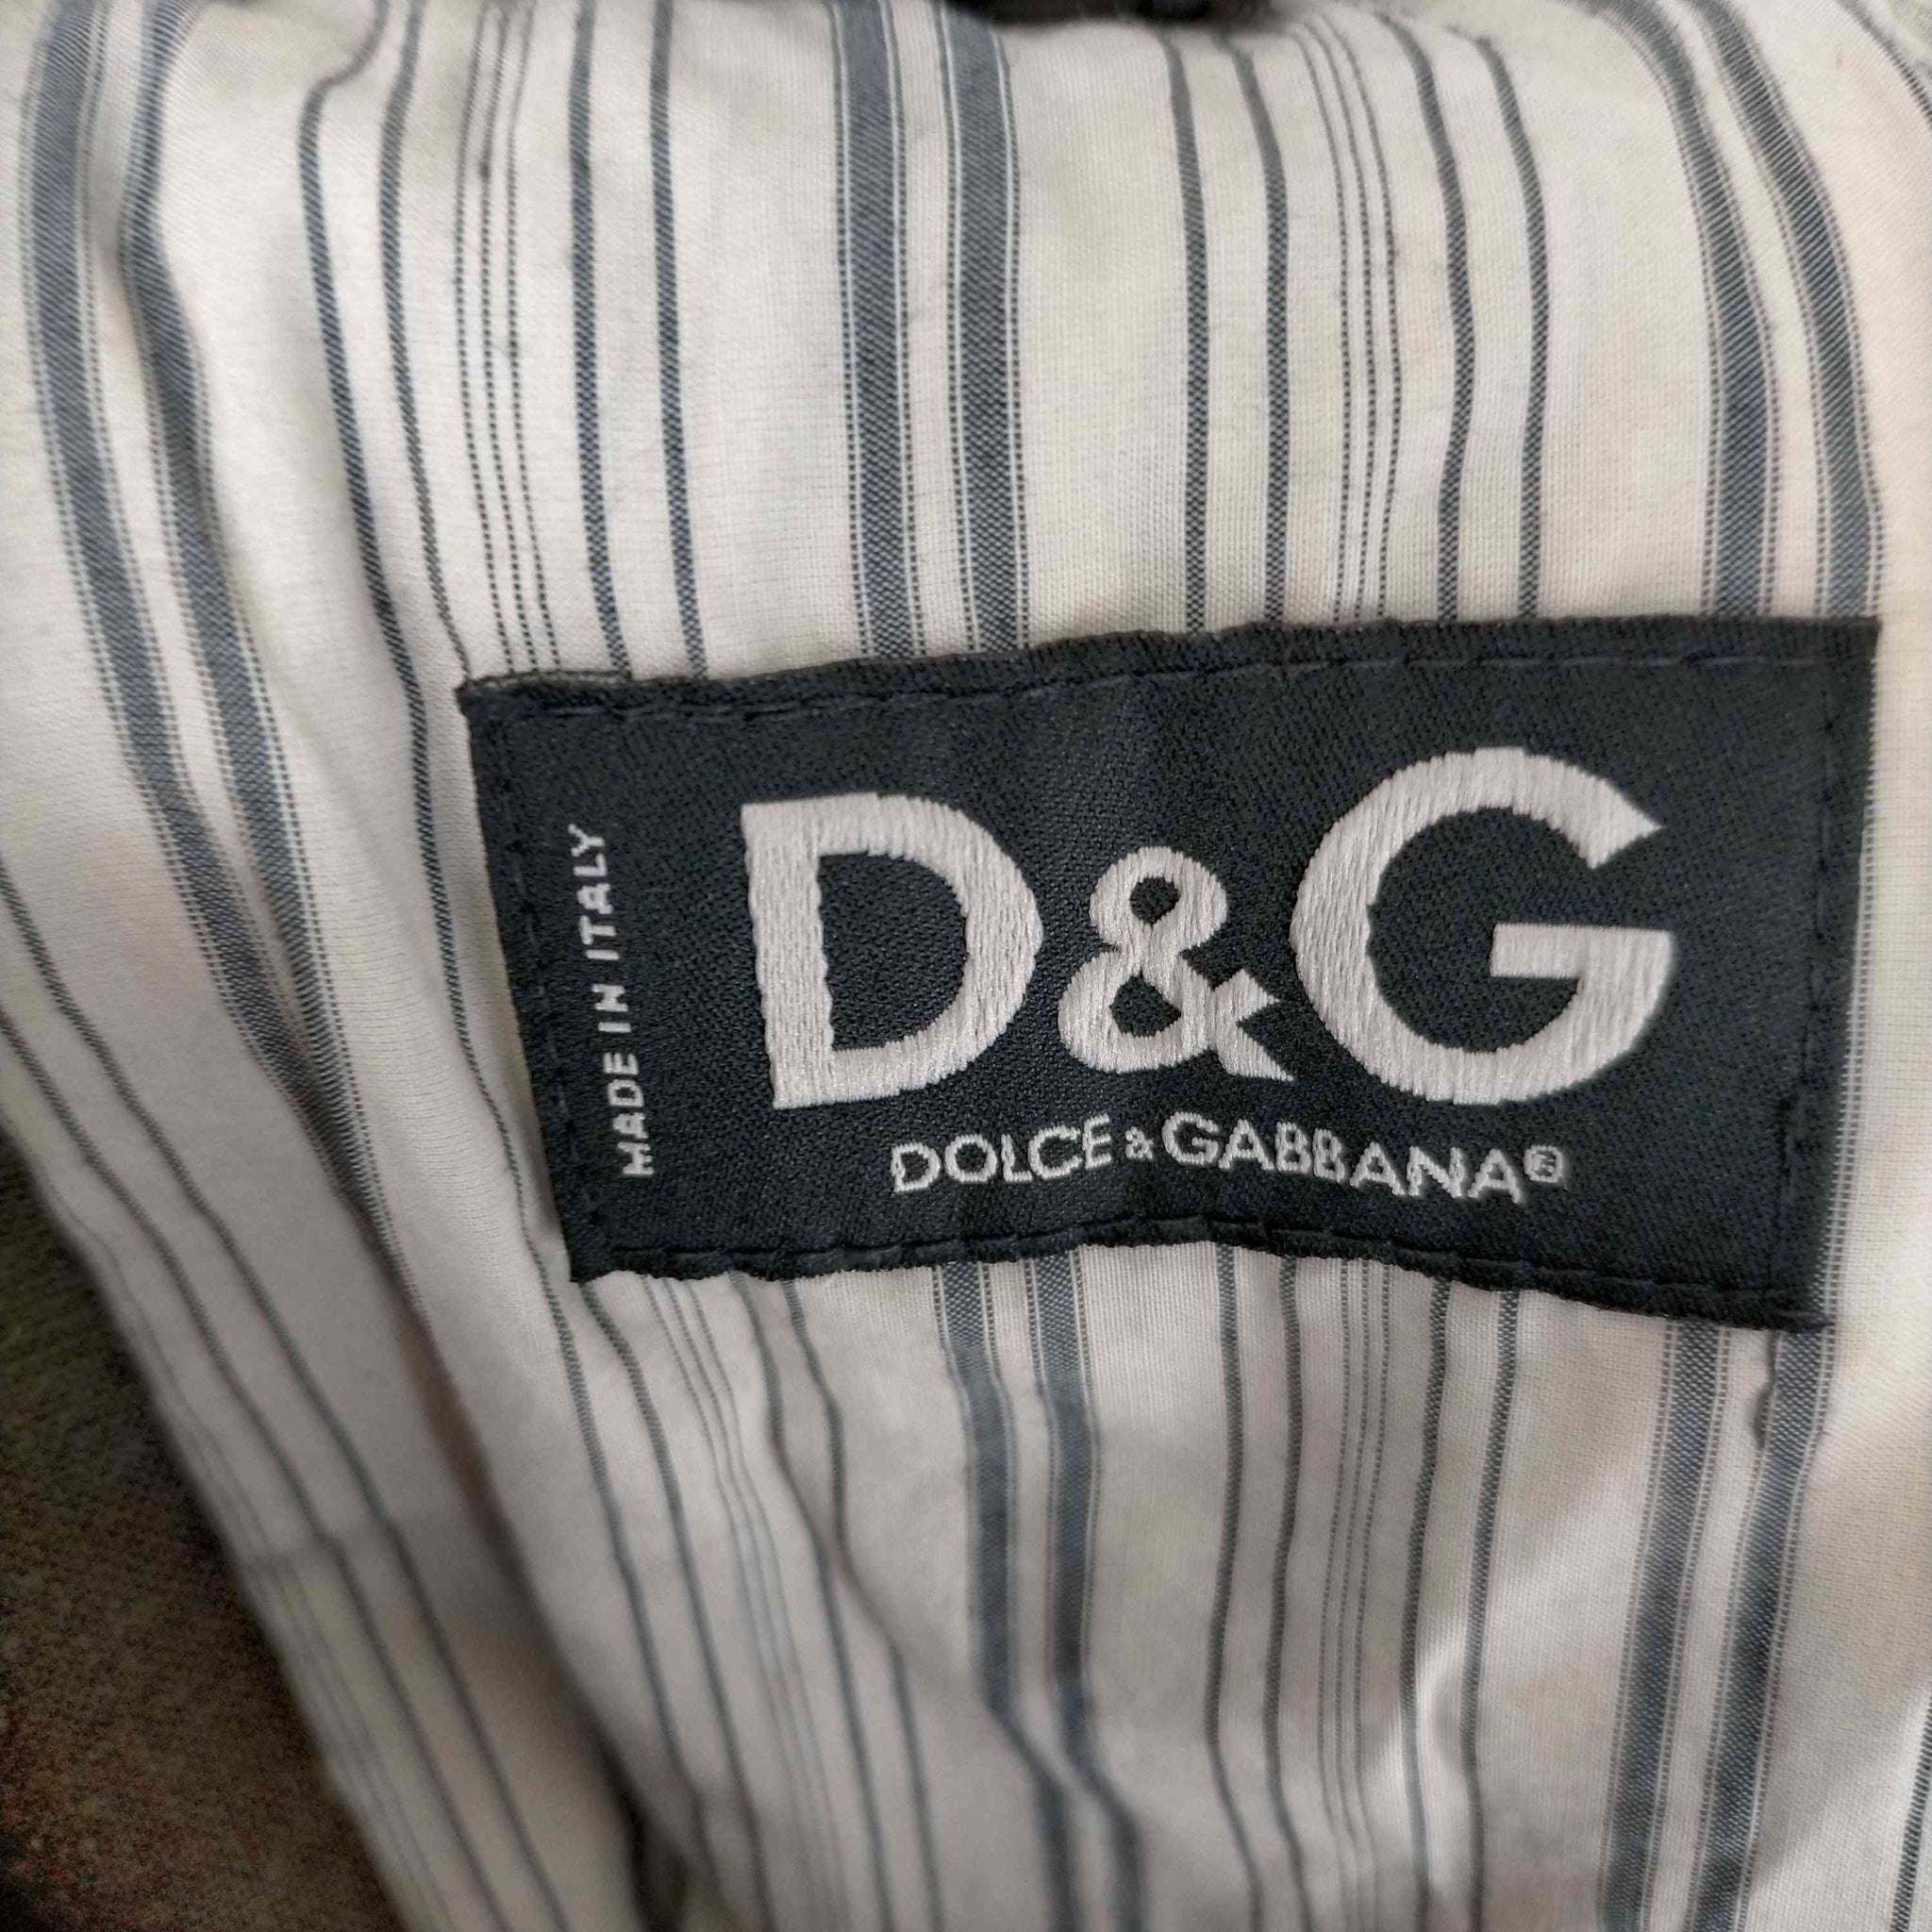 D&G DOLCE&GABBANA(ディーアンドジードルチェアンドガッバーナ)イタリア製 リネン混 スーツセットアップ